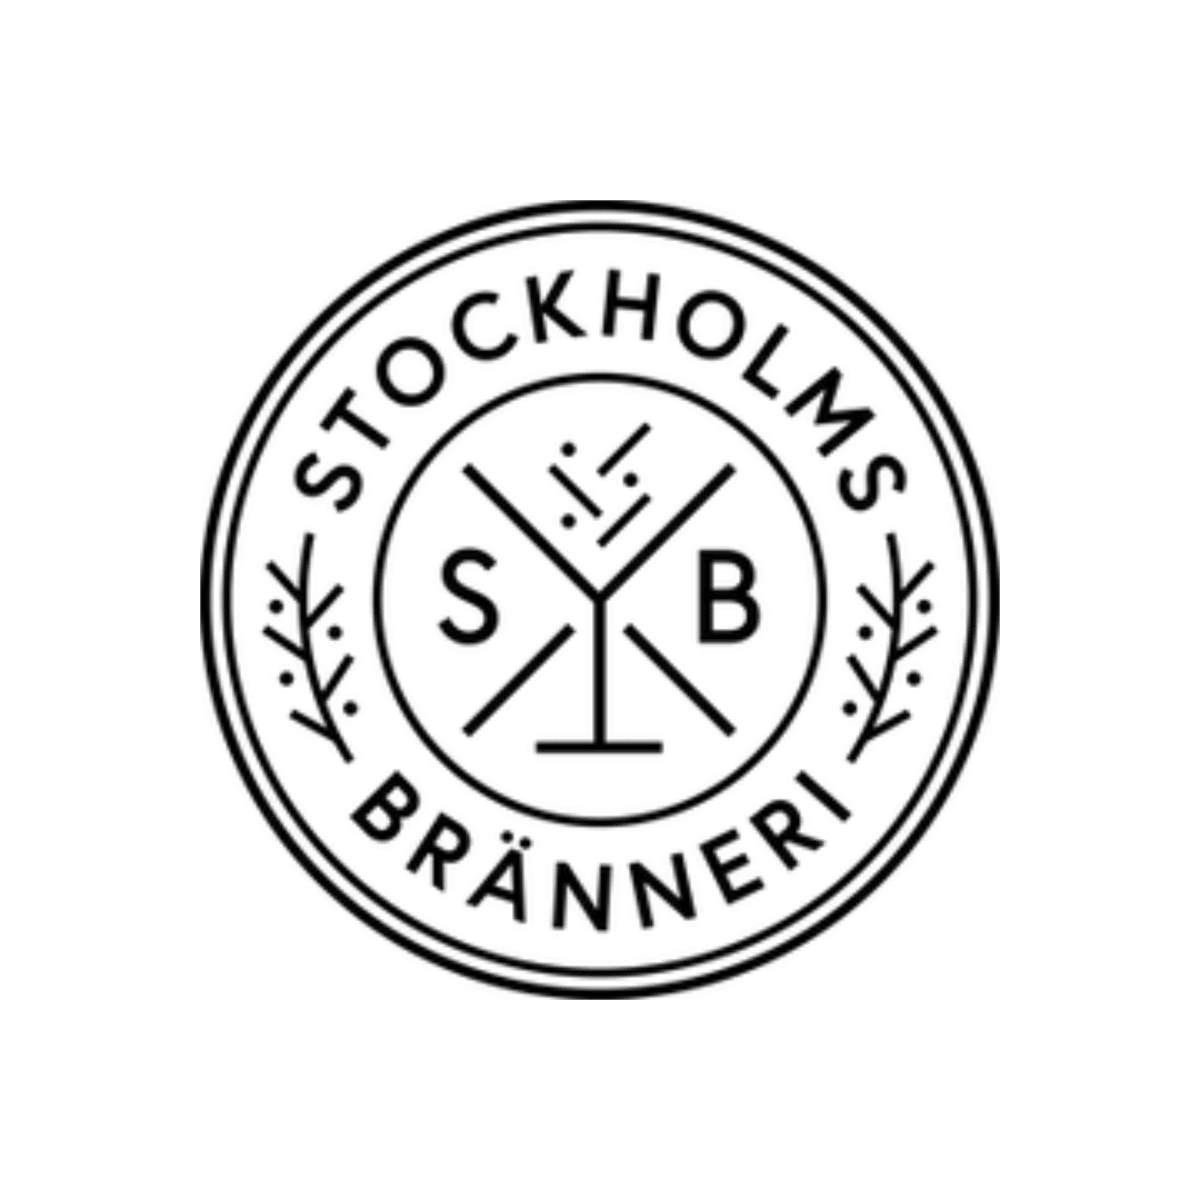 Stockholms Bränneri Logo